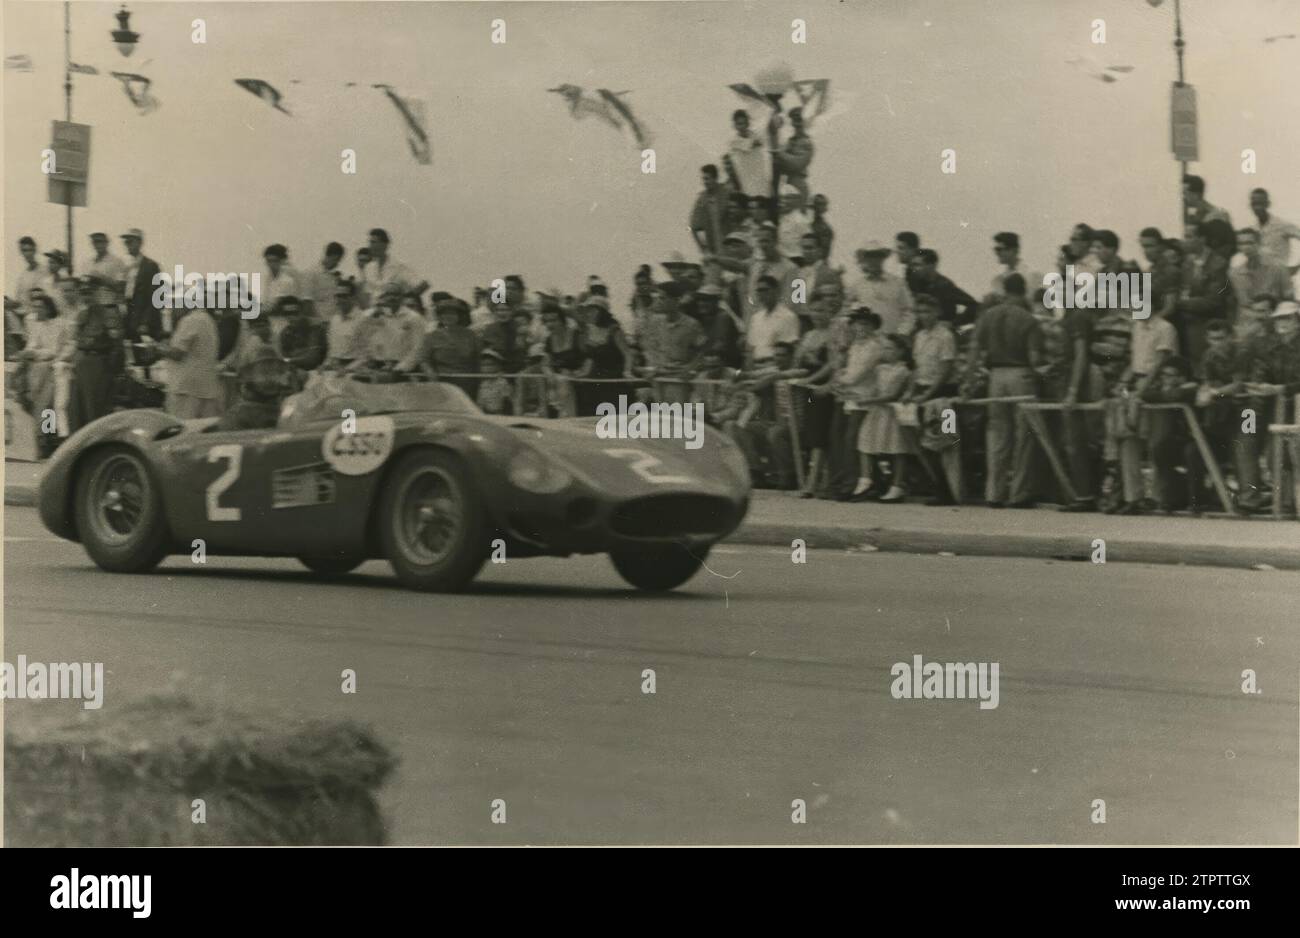 March 1957. The World Champion, Juan Manuel Fangio, entering the finish line. Credit: Album / Archivo ABC Stock Photo